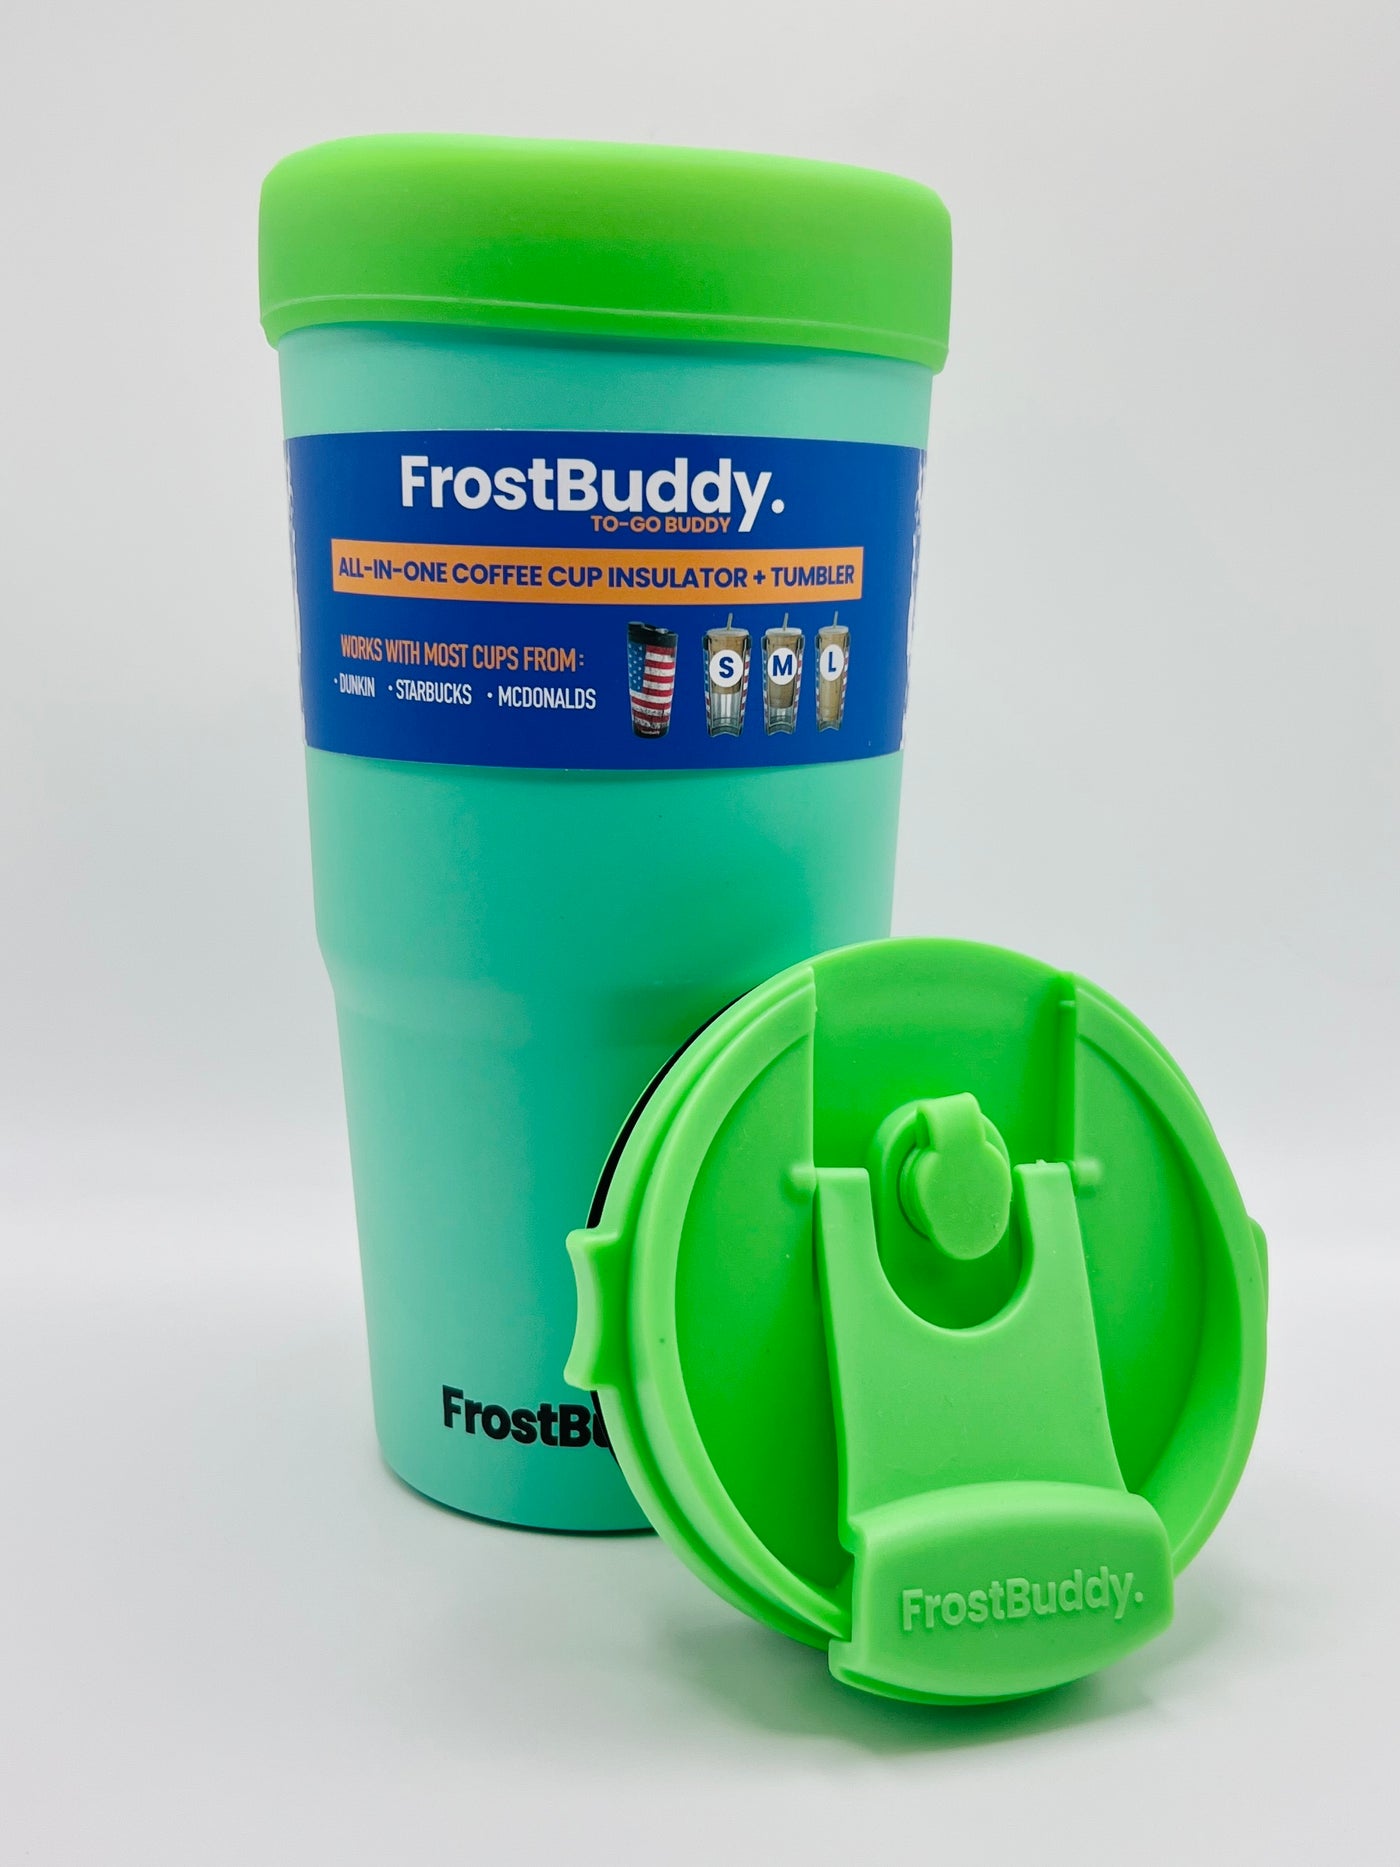 Frost Buddy To-Go Tumbler/Insulator